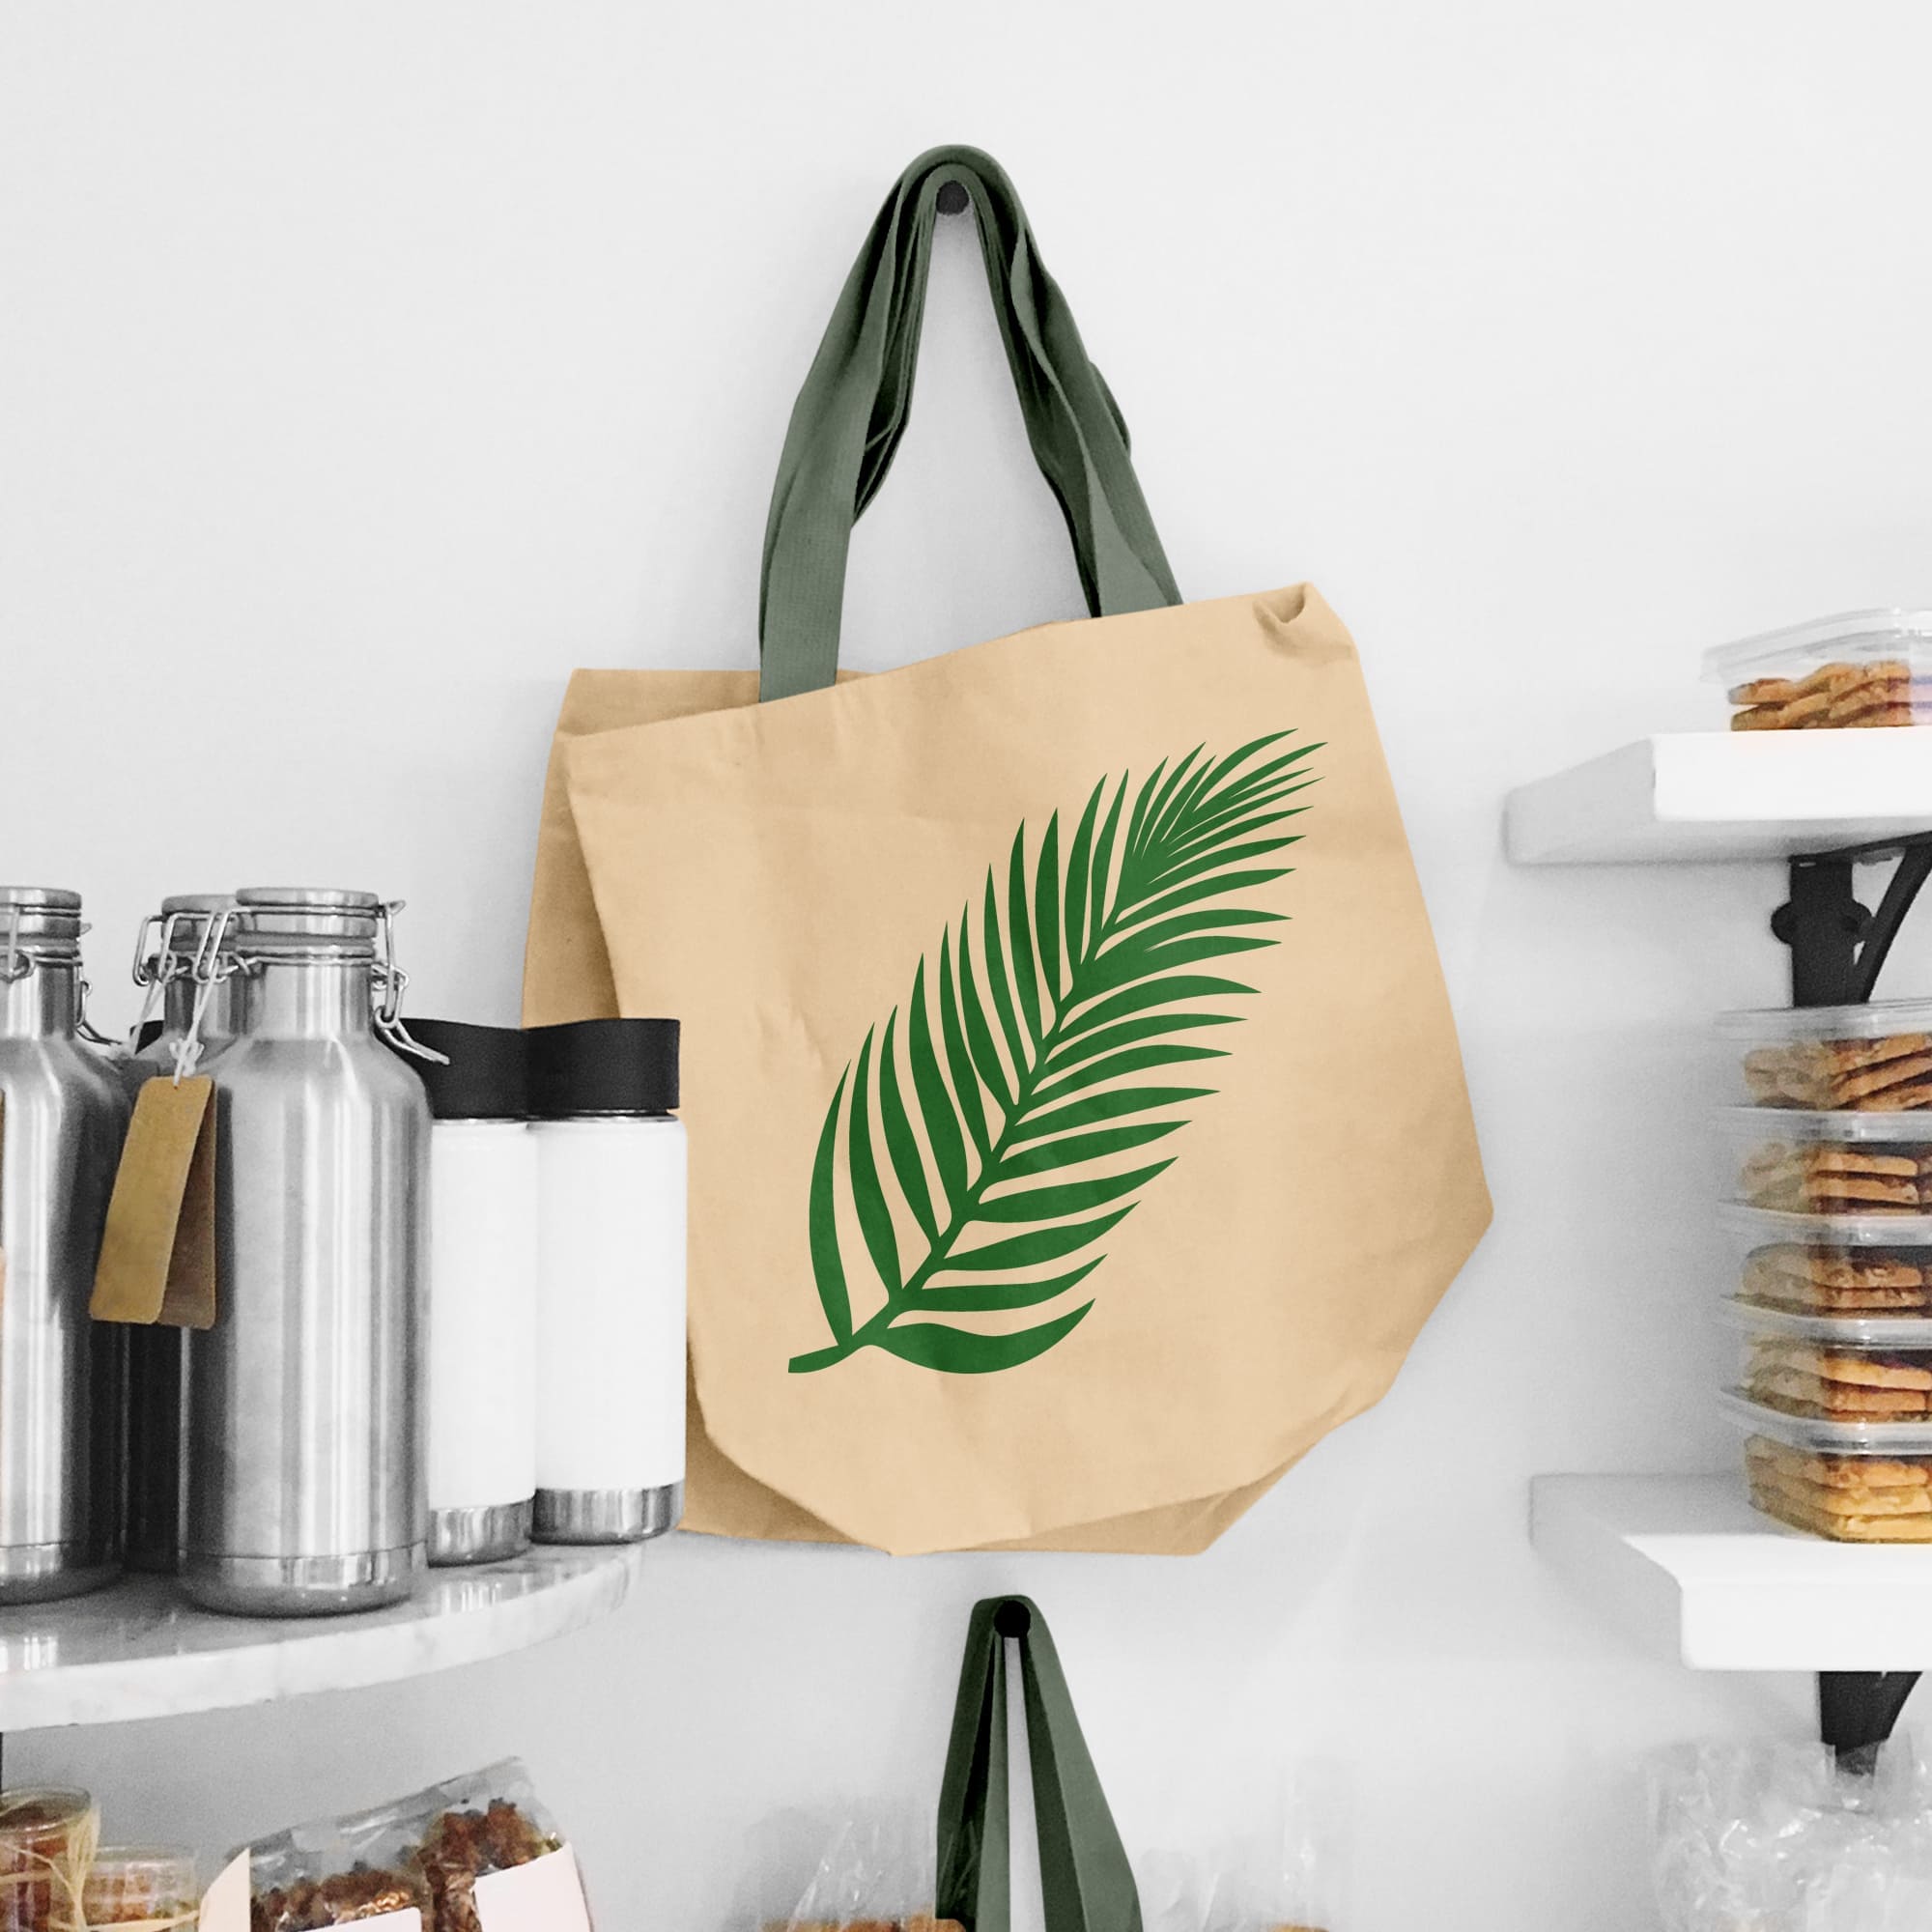 A long palm leaf is drawn on the beige bag.